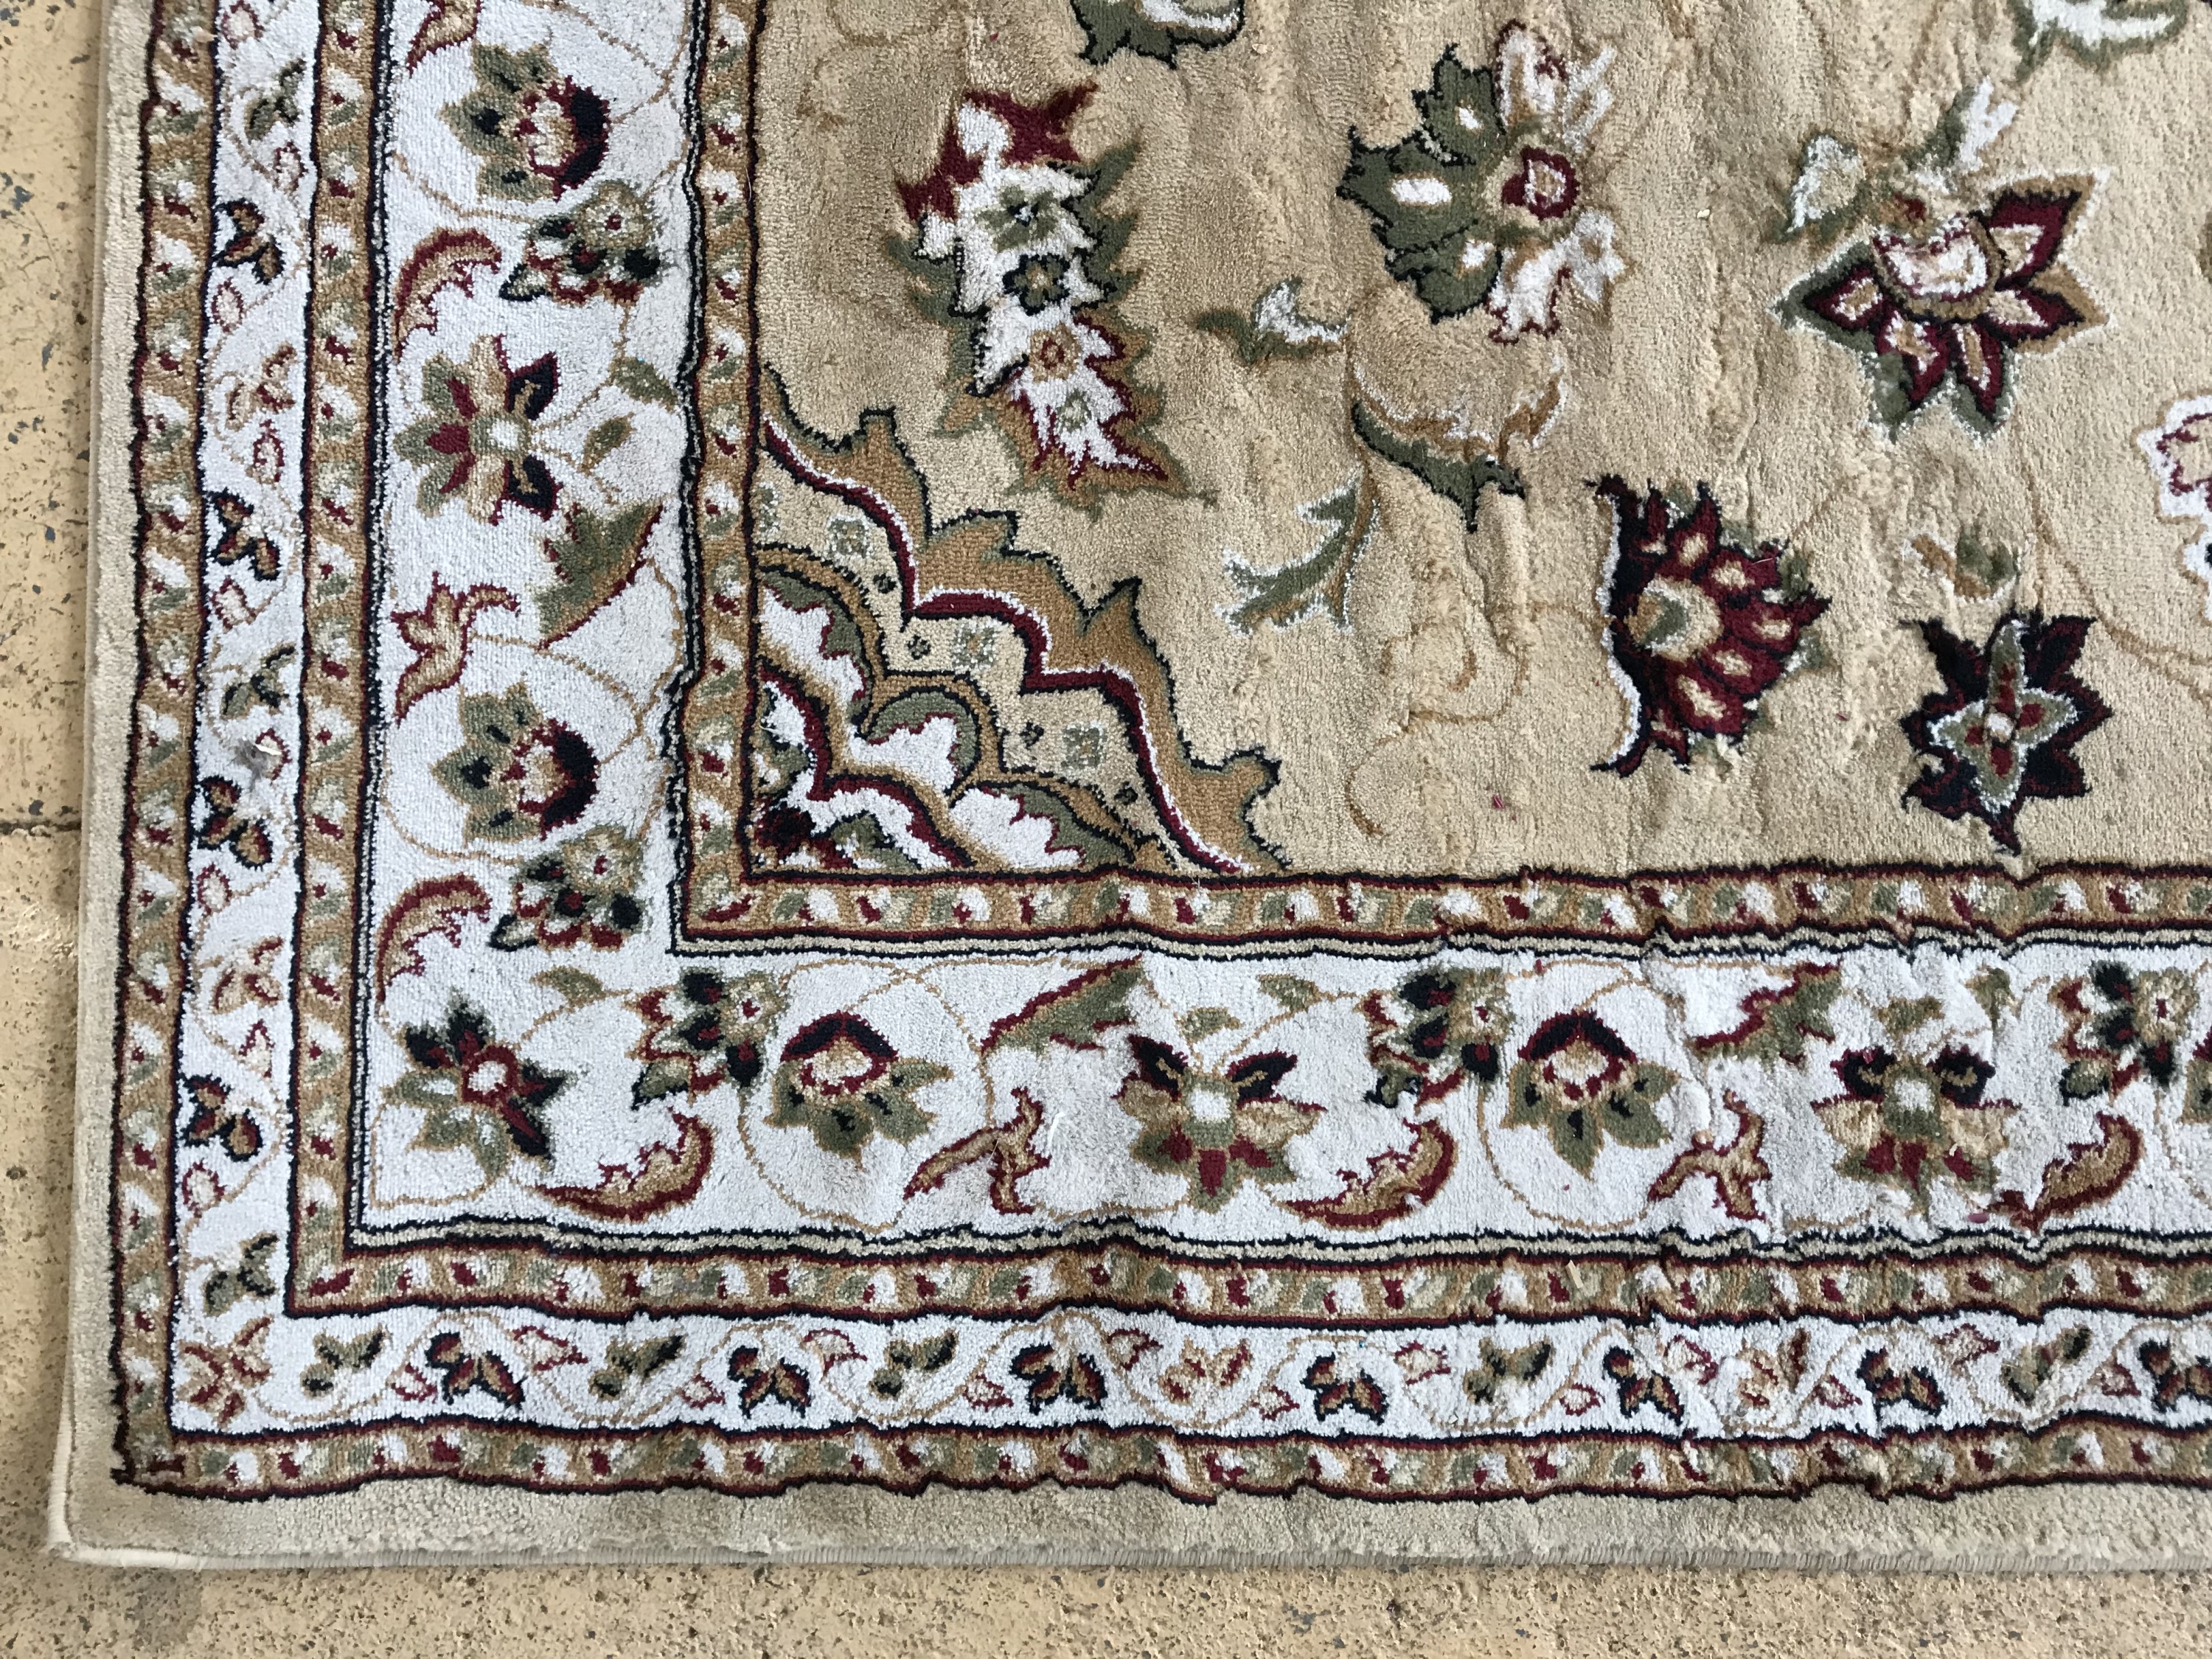 A Simplicity Sincerity Royale rug, 160 x 230 cm - Image 2 of 2